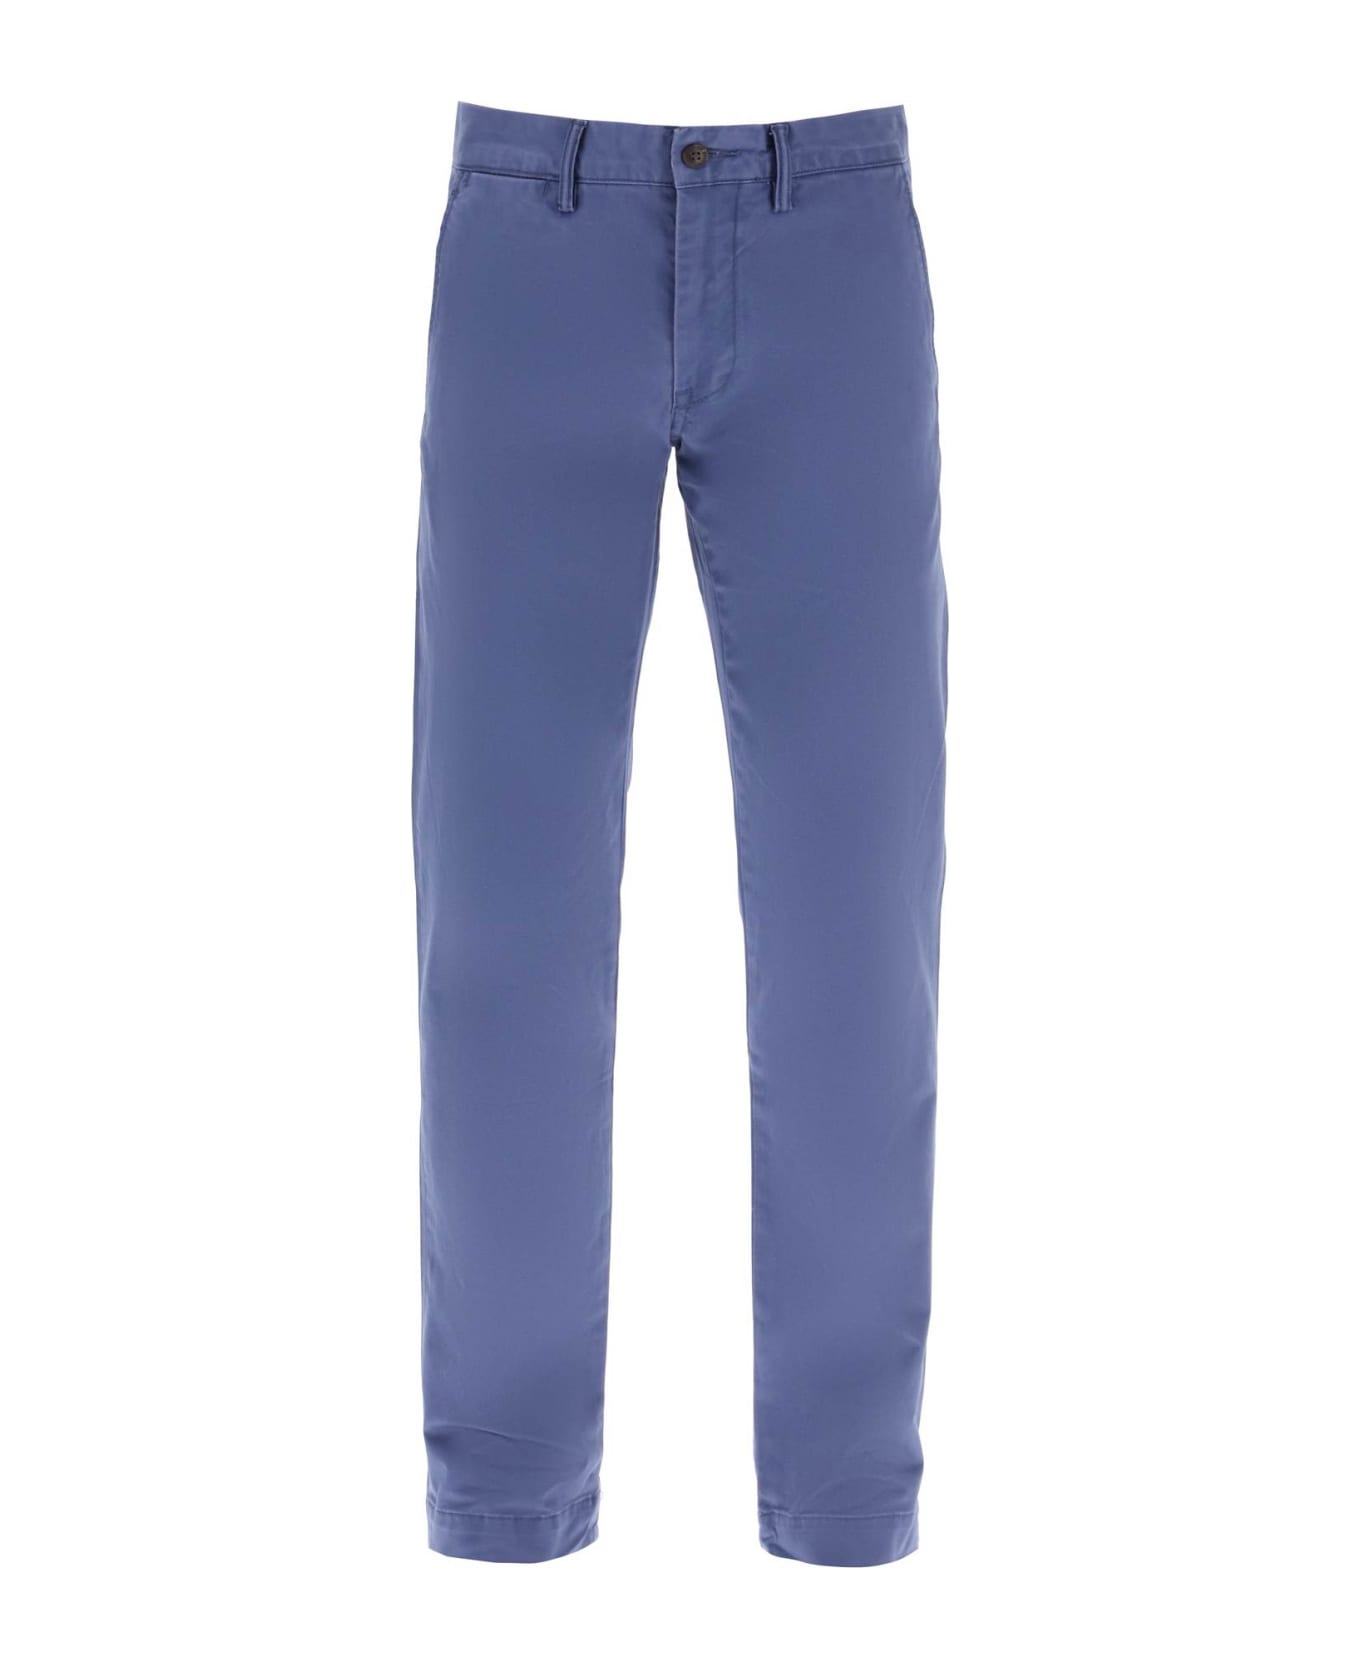 Polo Ralph Lauren Chino Pants In Cotton - LIGHT NAVY (Light blue)